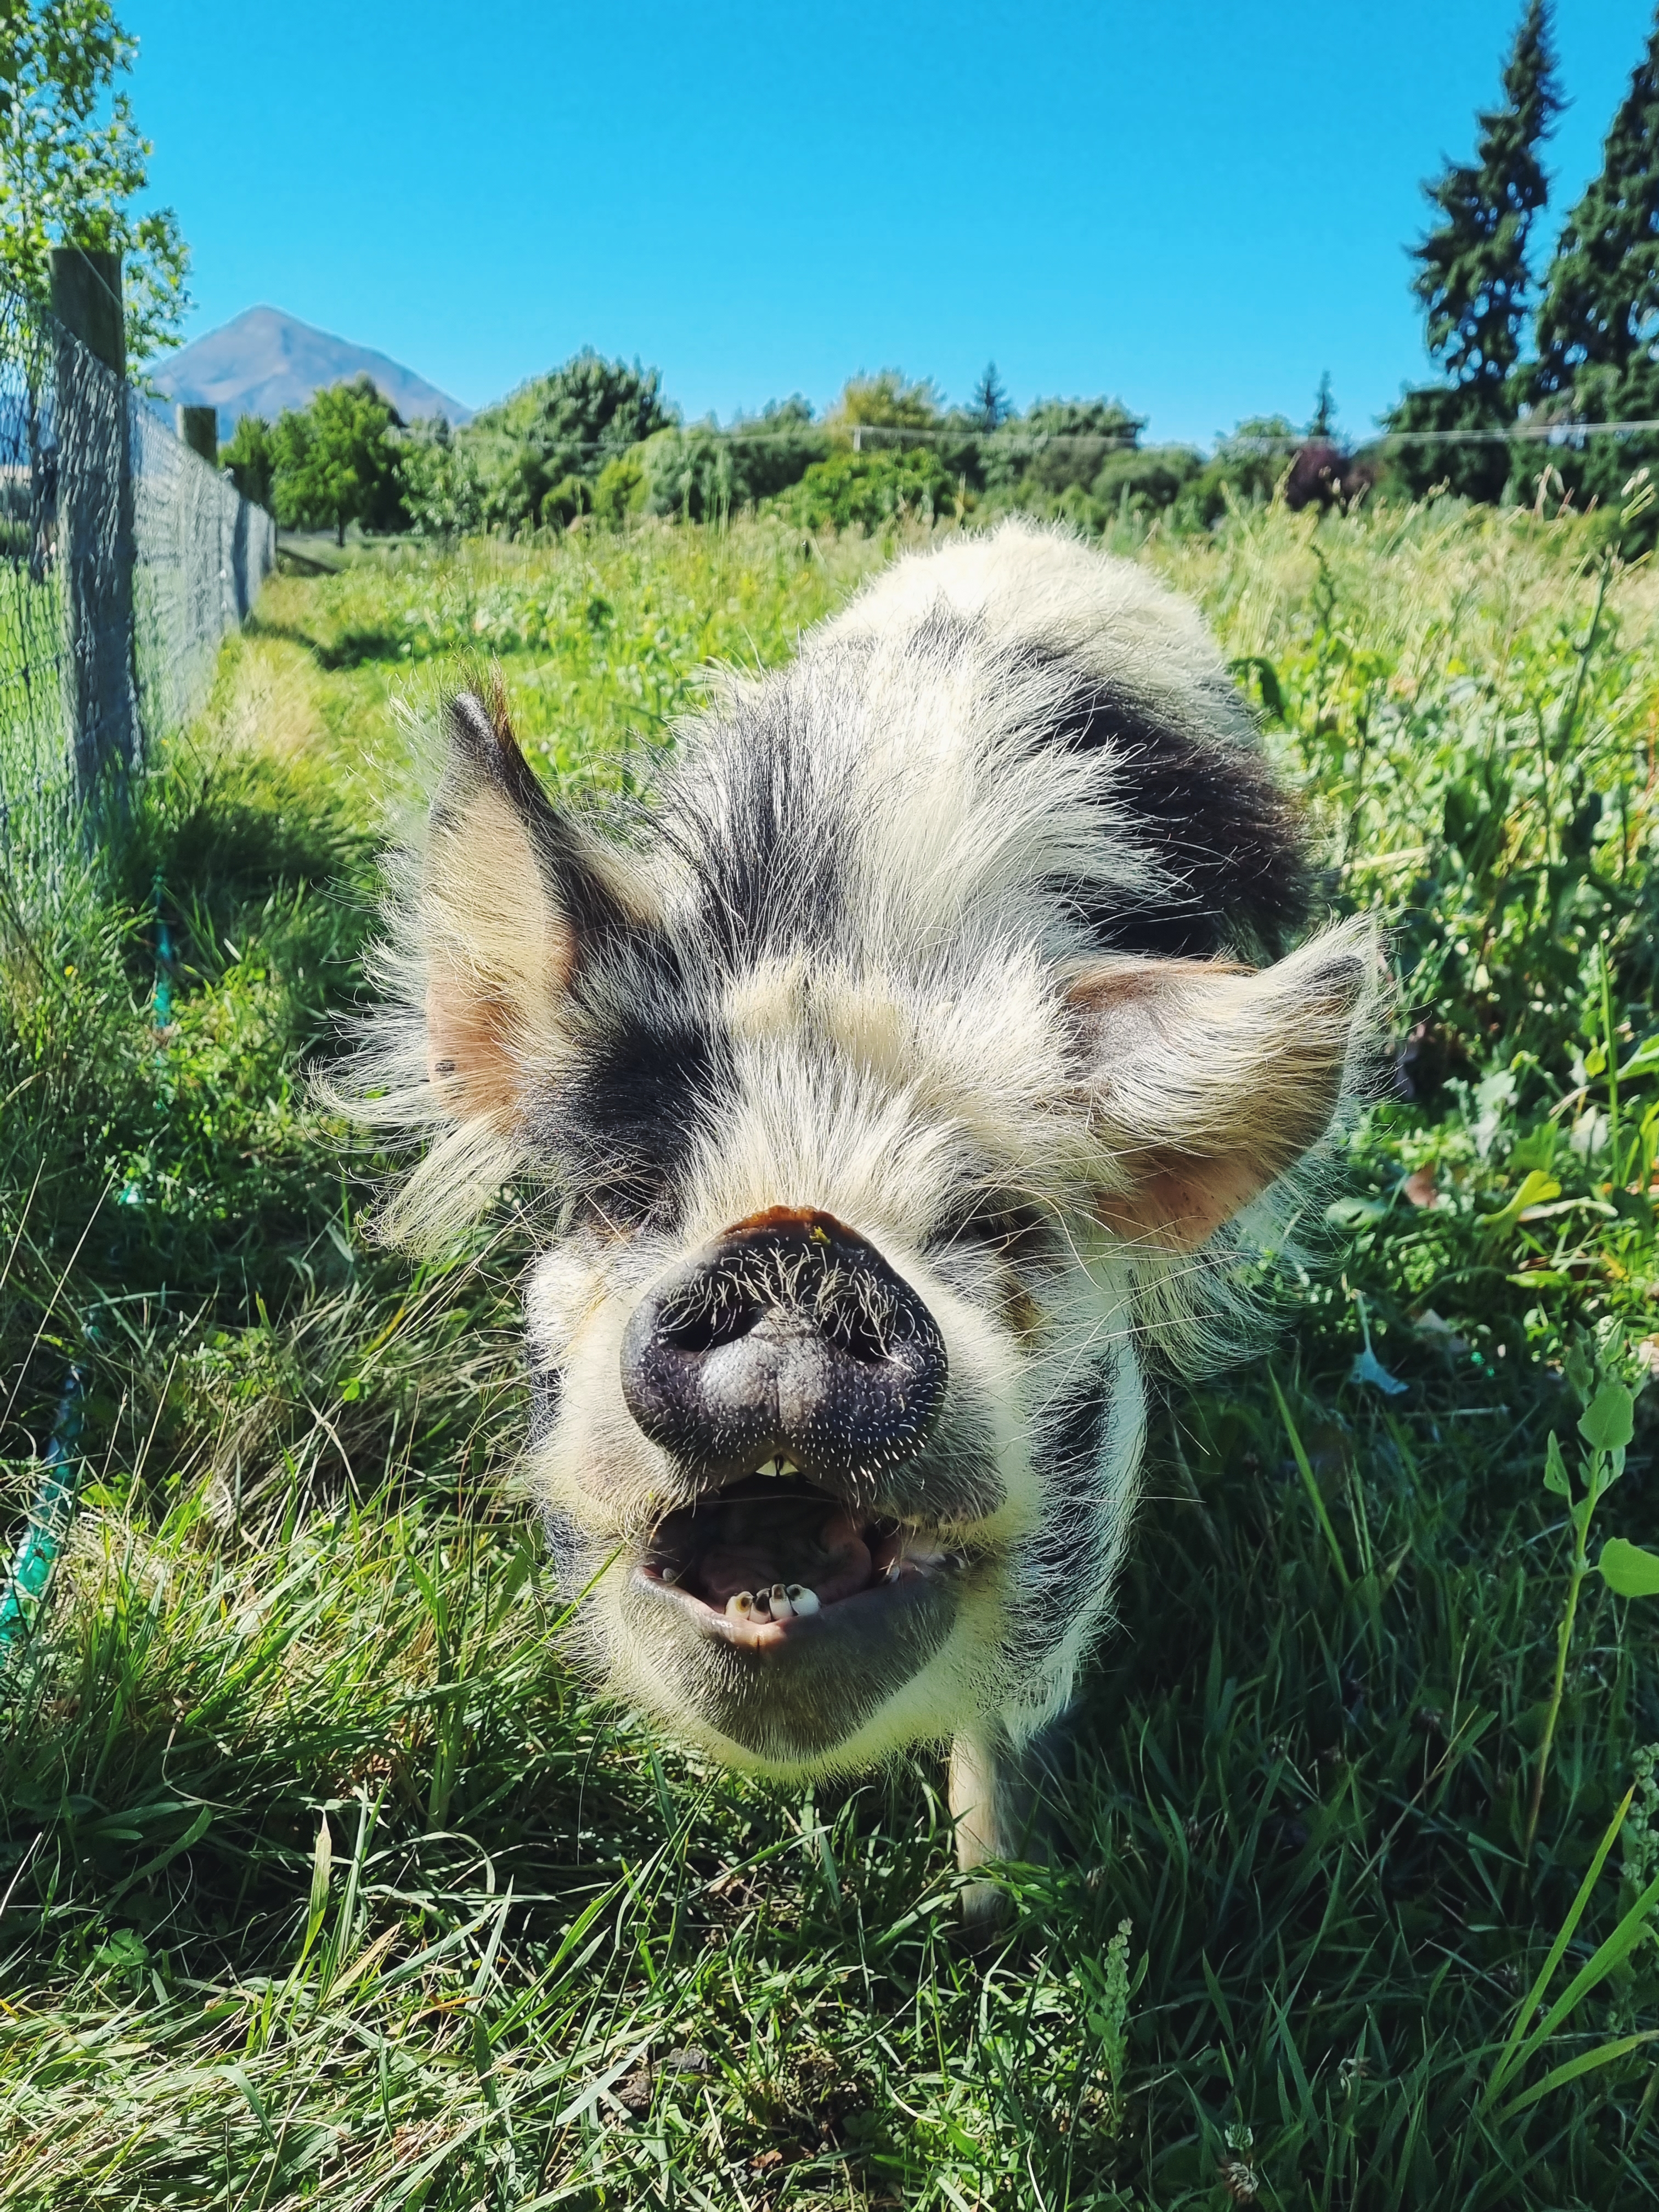 happy pig smiling at the camera, eating green grass